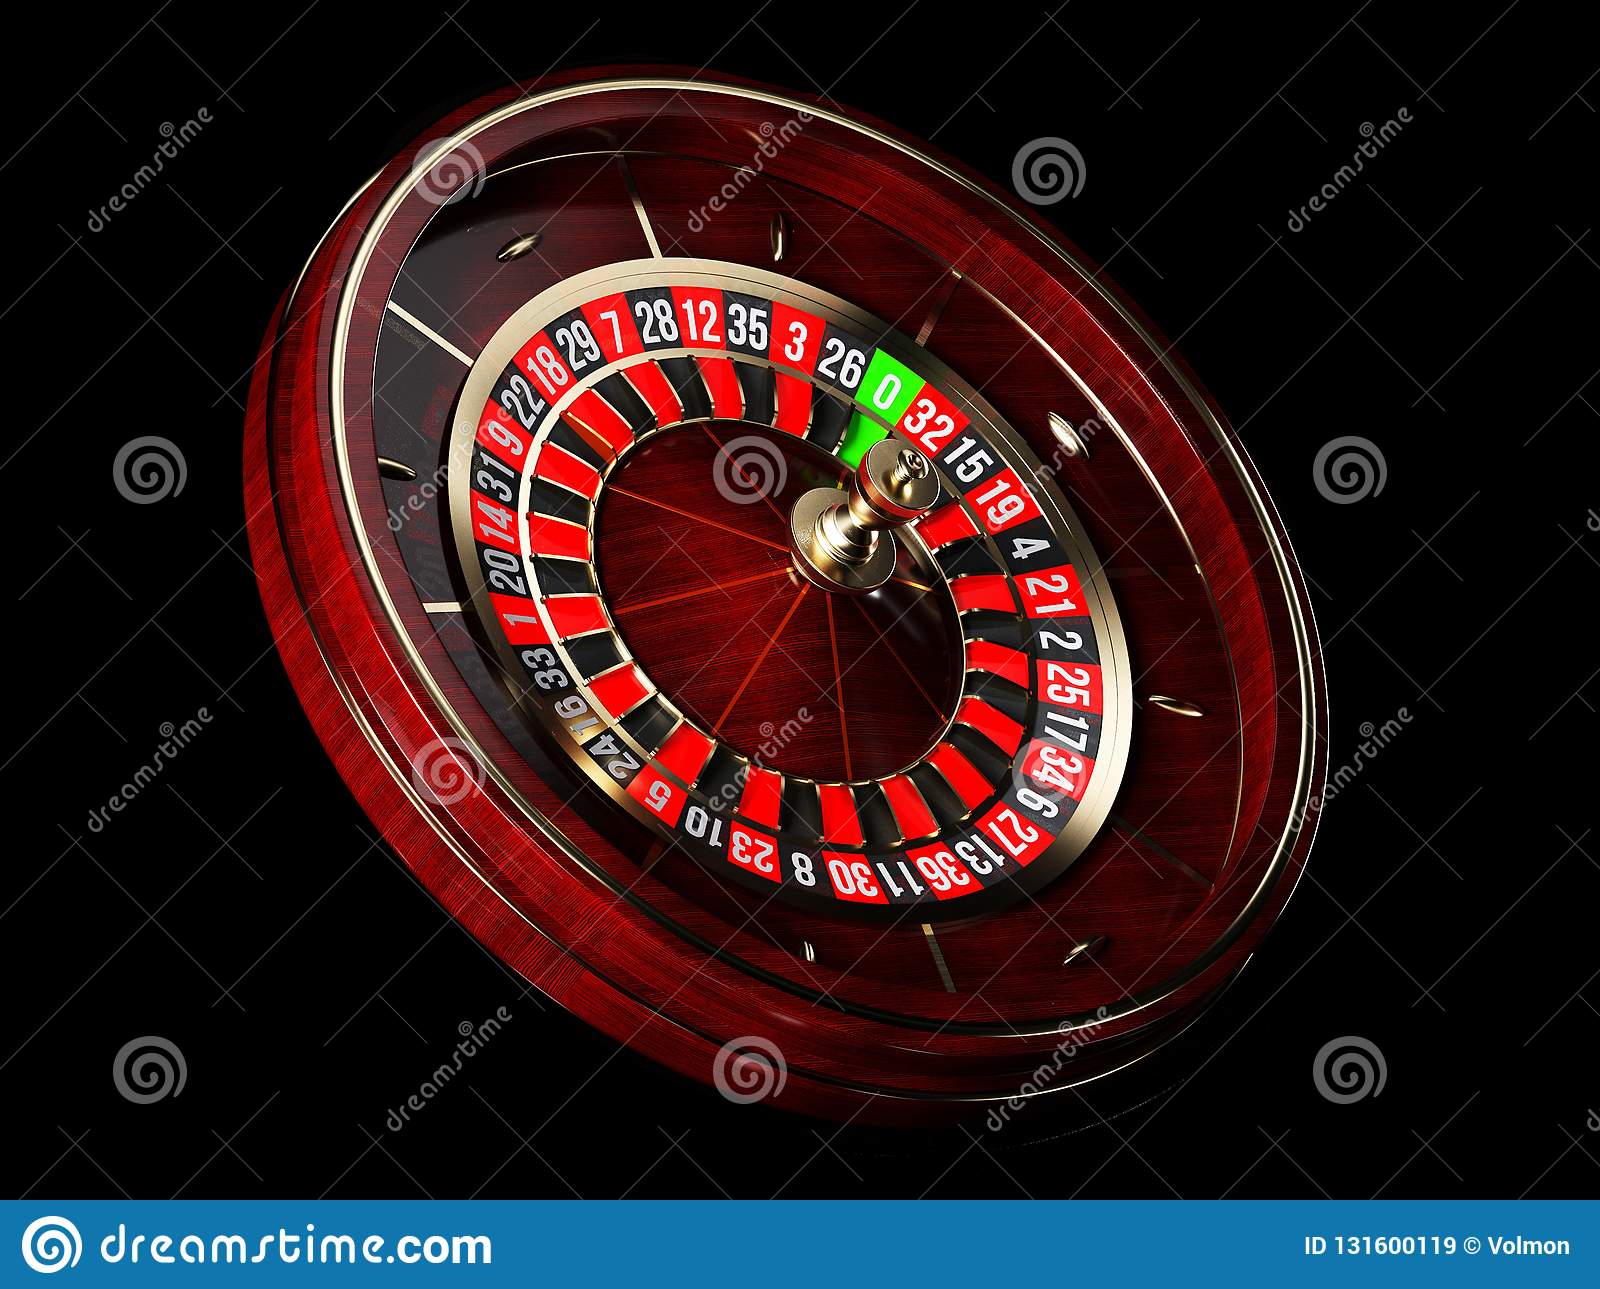 Buzzluck casino no deposit bonus 2022